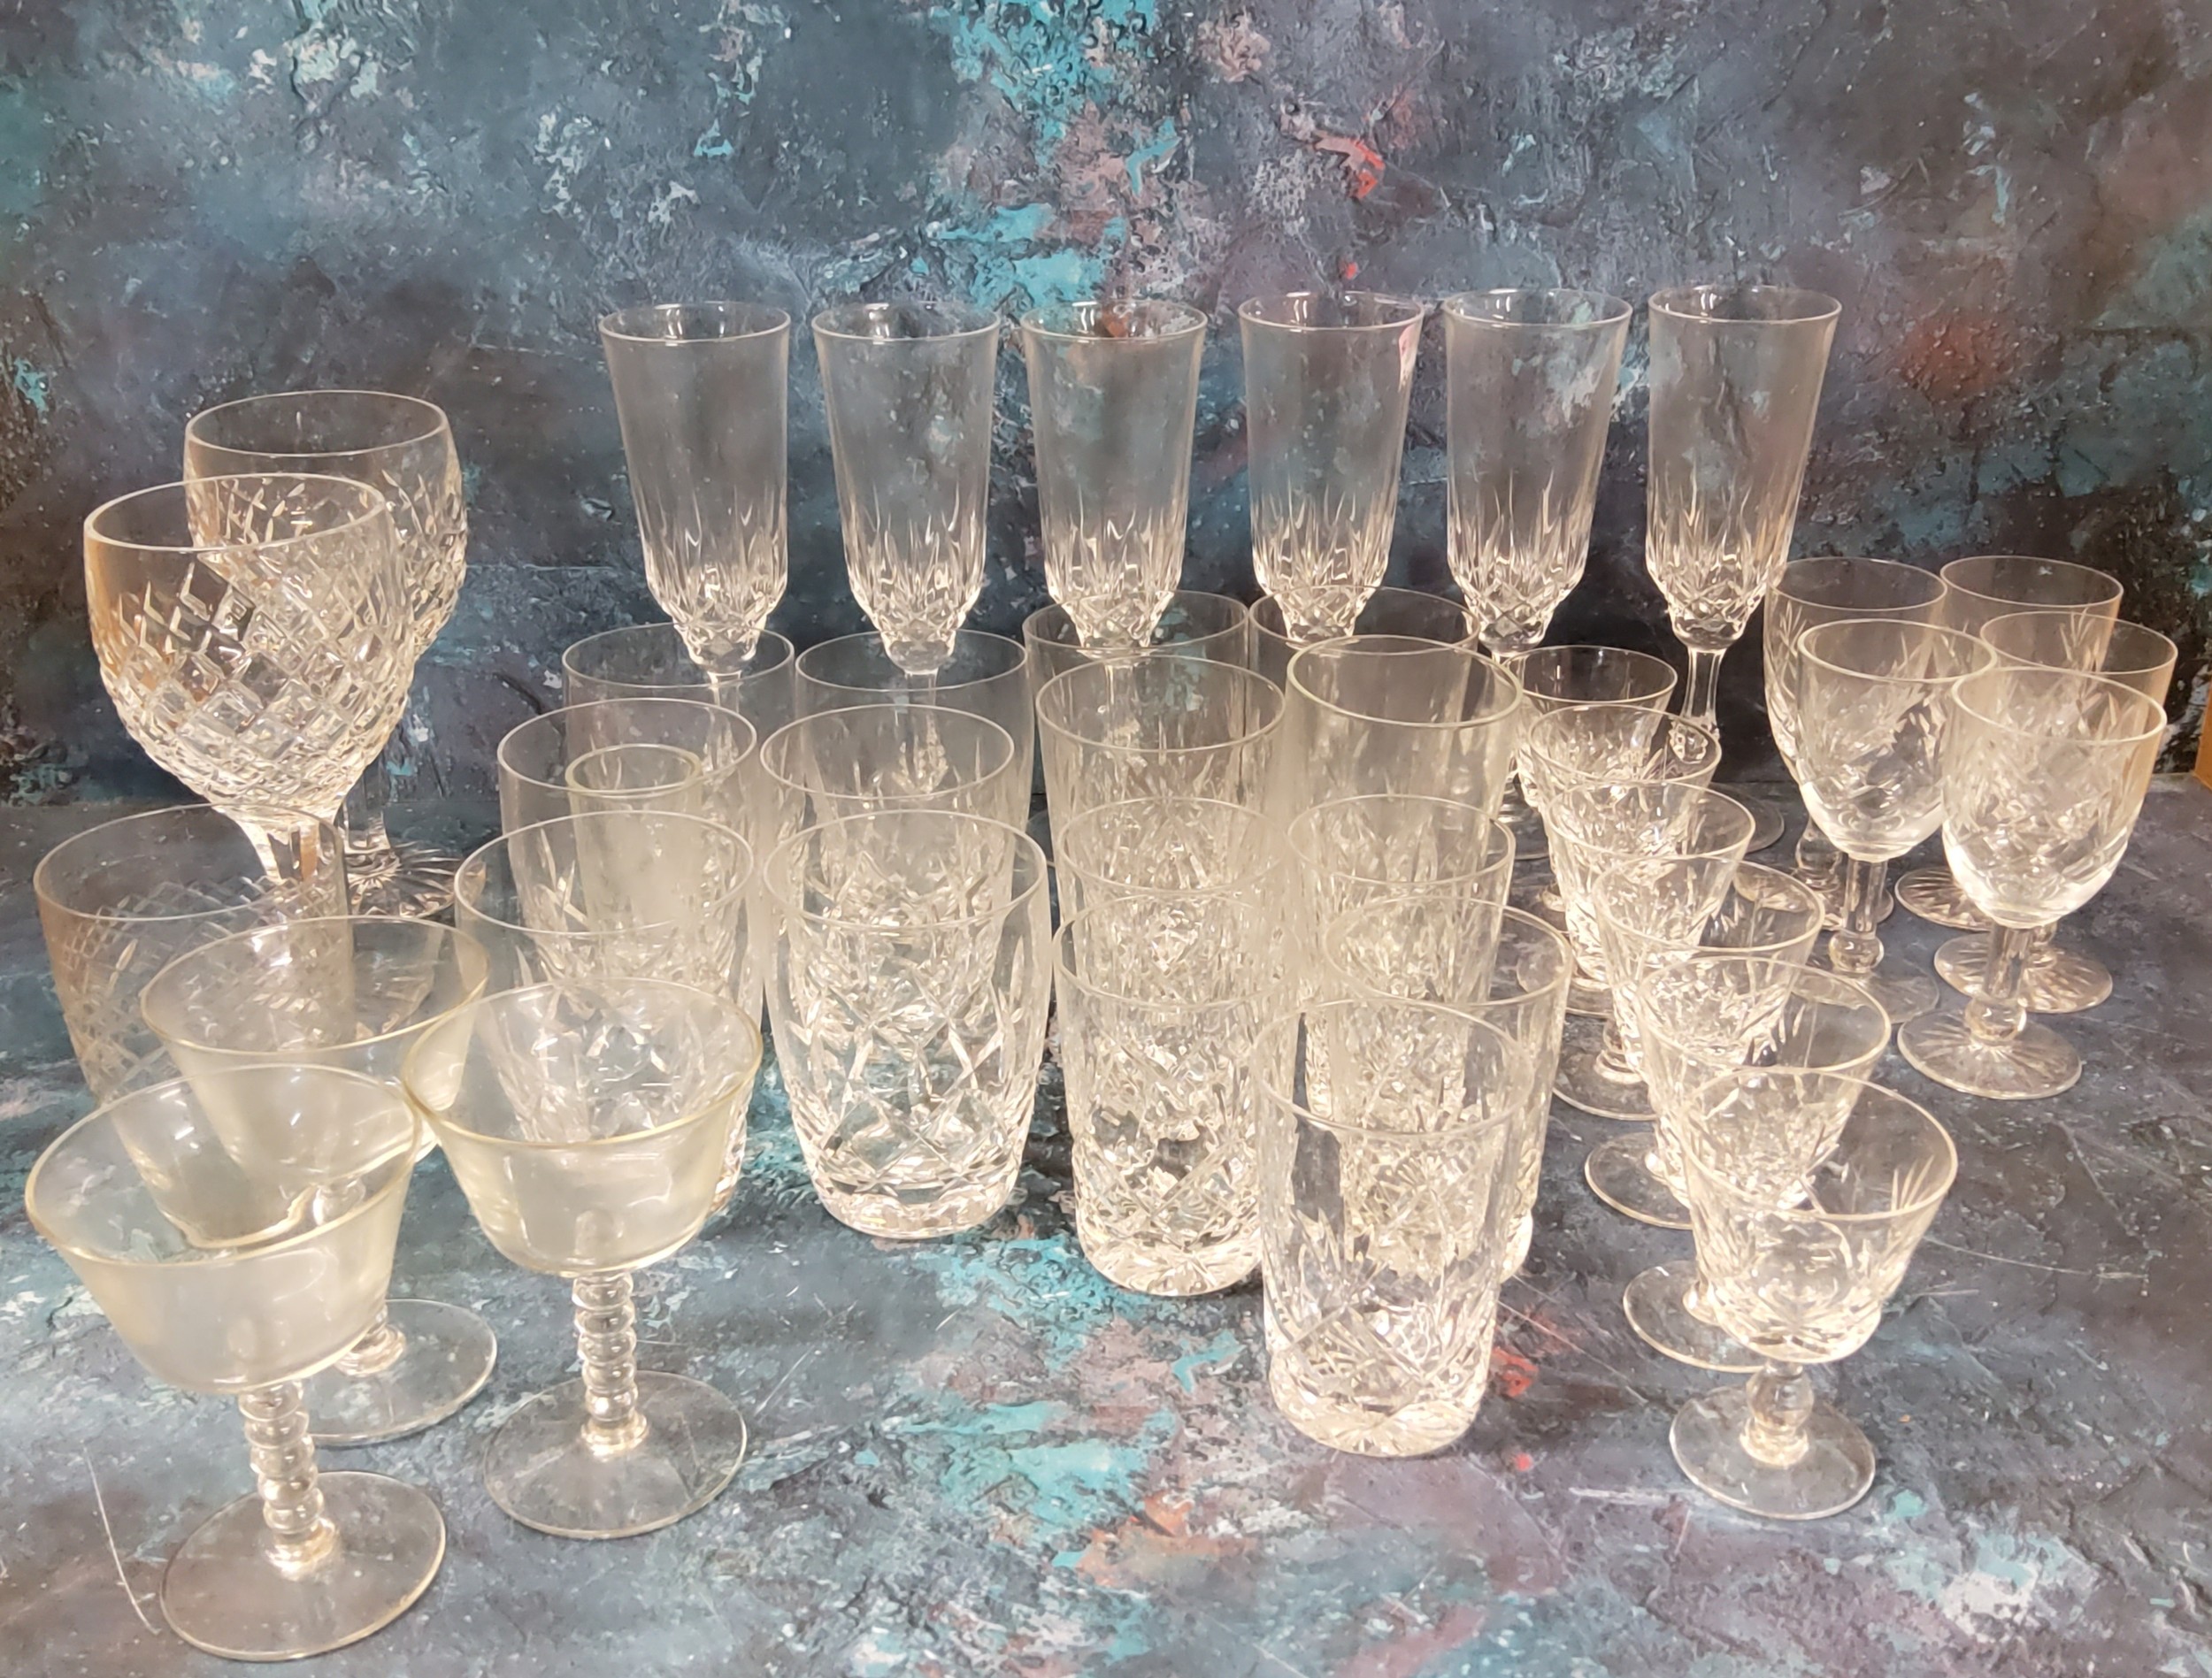 Glassware - cut glass beakers, wine glasses, sherry, etc